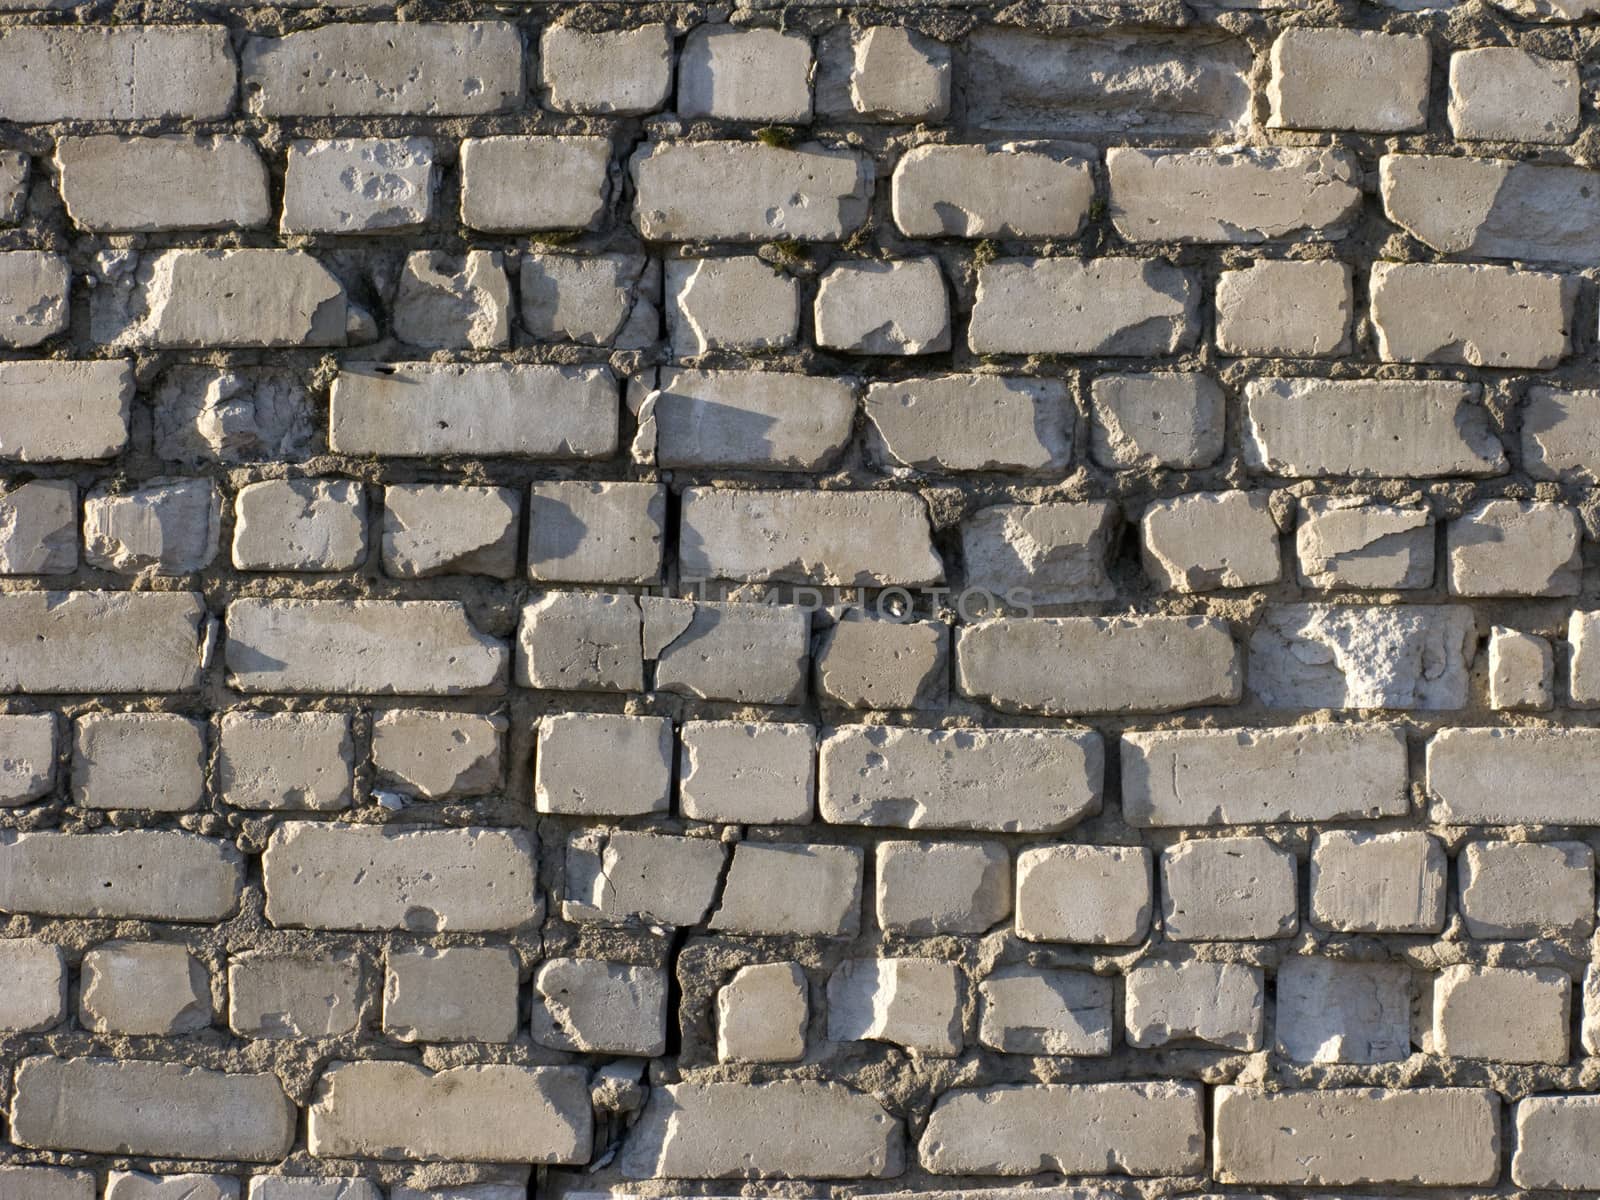 Fragment of old grey brick wall surface